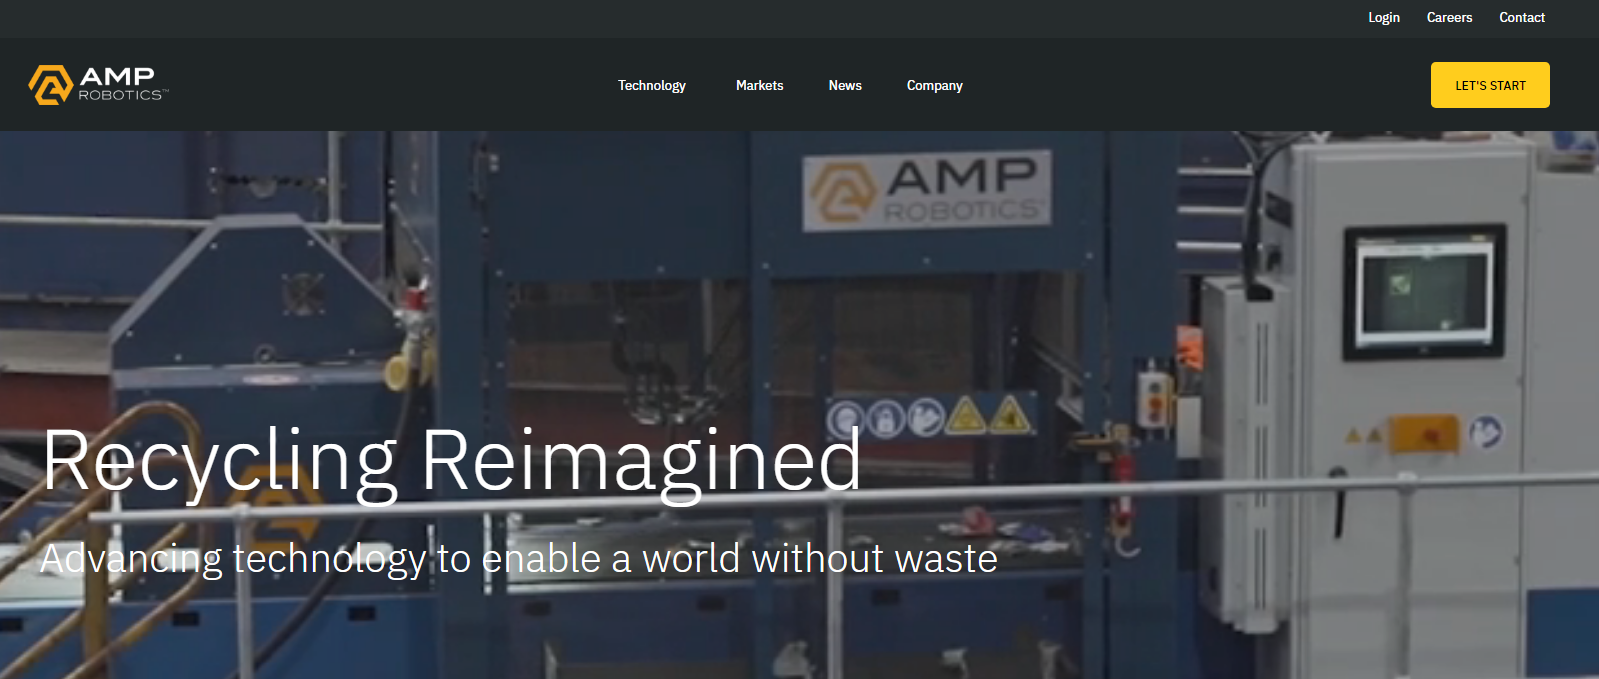 AMP Robotics Raises $99M in Series C Funding Round Led By Congruent Ventures and Wellington Management.